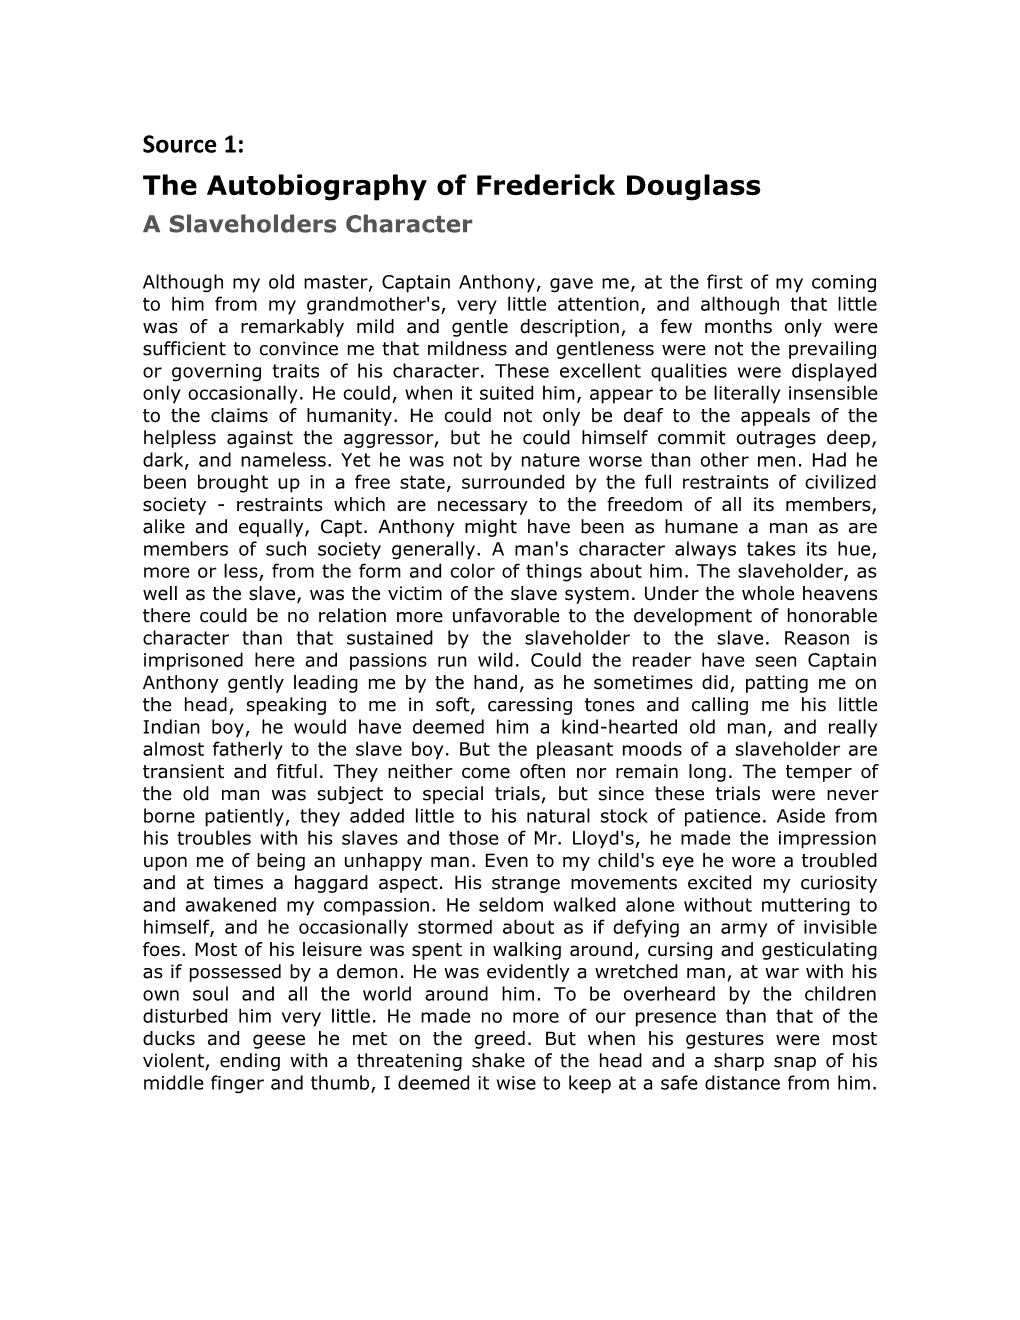 The Autobiography of Frederick Douglass